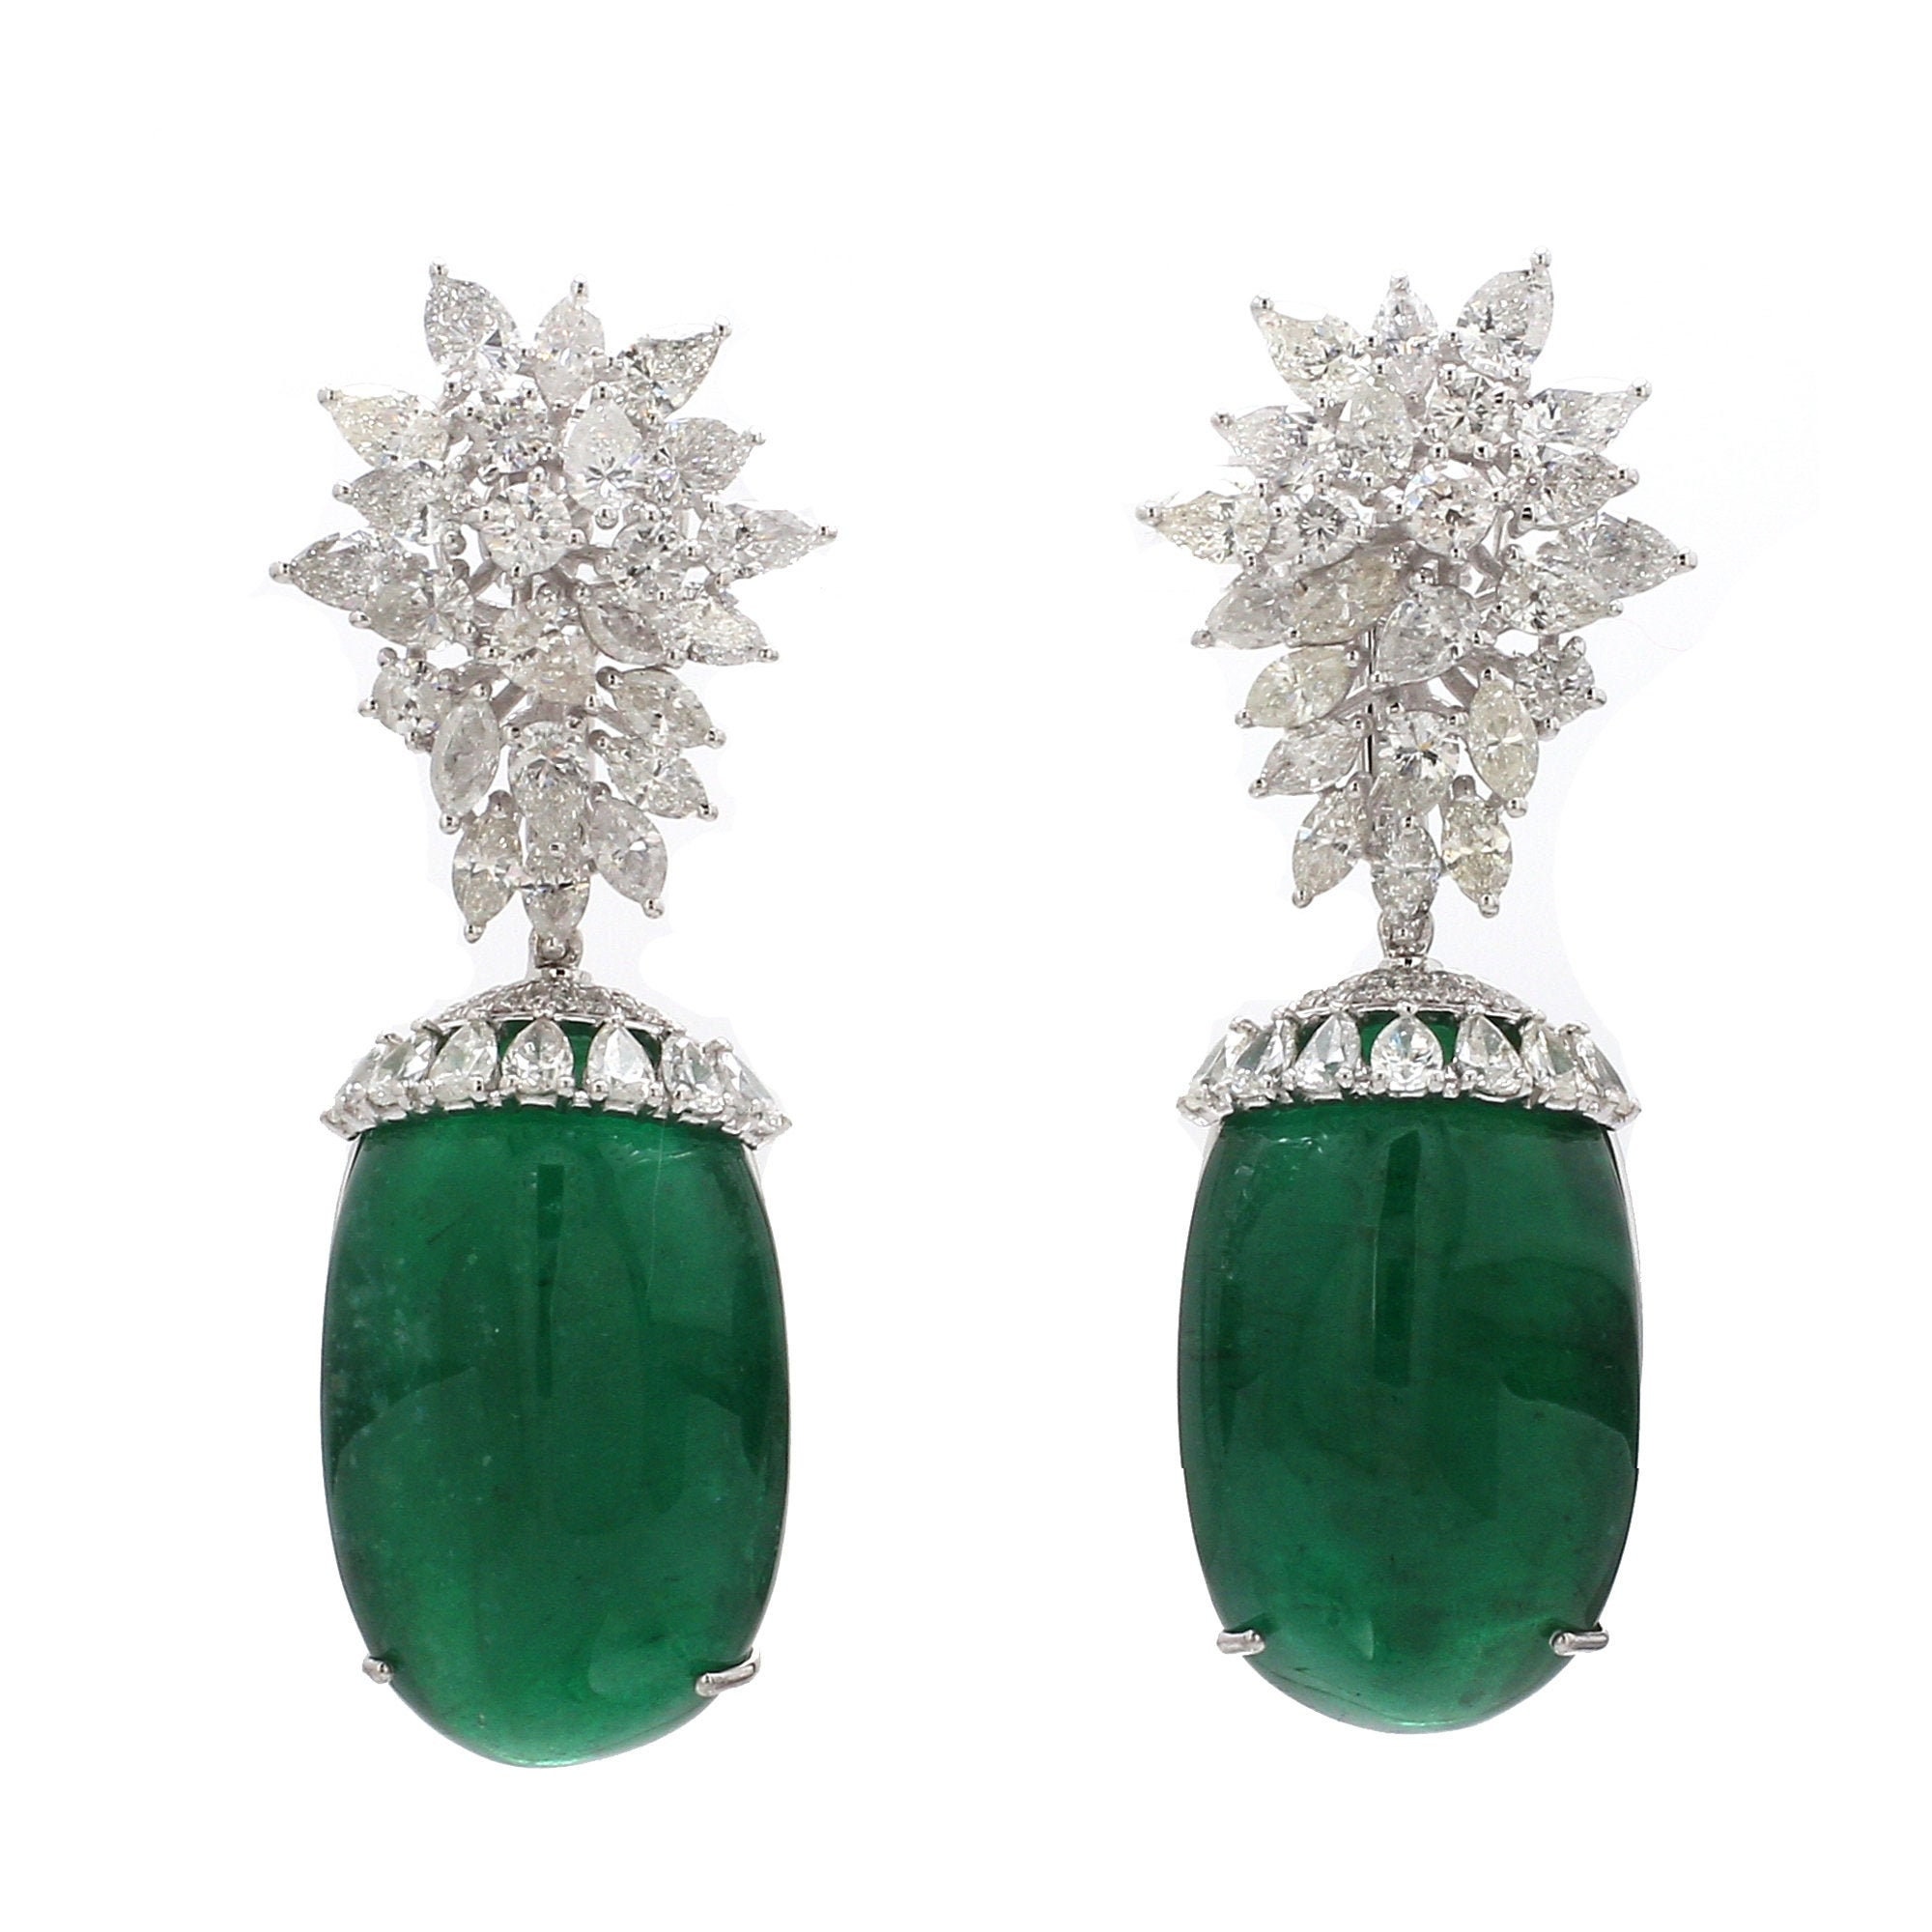 Diamond Earrings Natural 68.4 Carat Oval Zambian Emerald 14K White Gold Fine Jewelry For Women